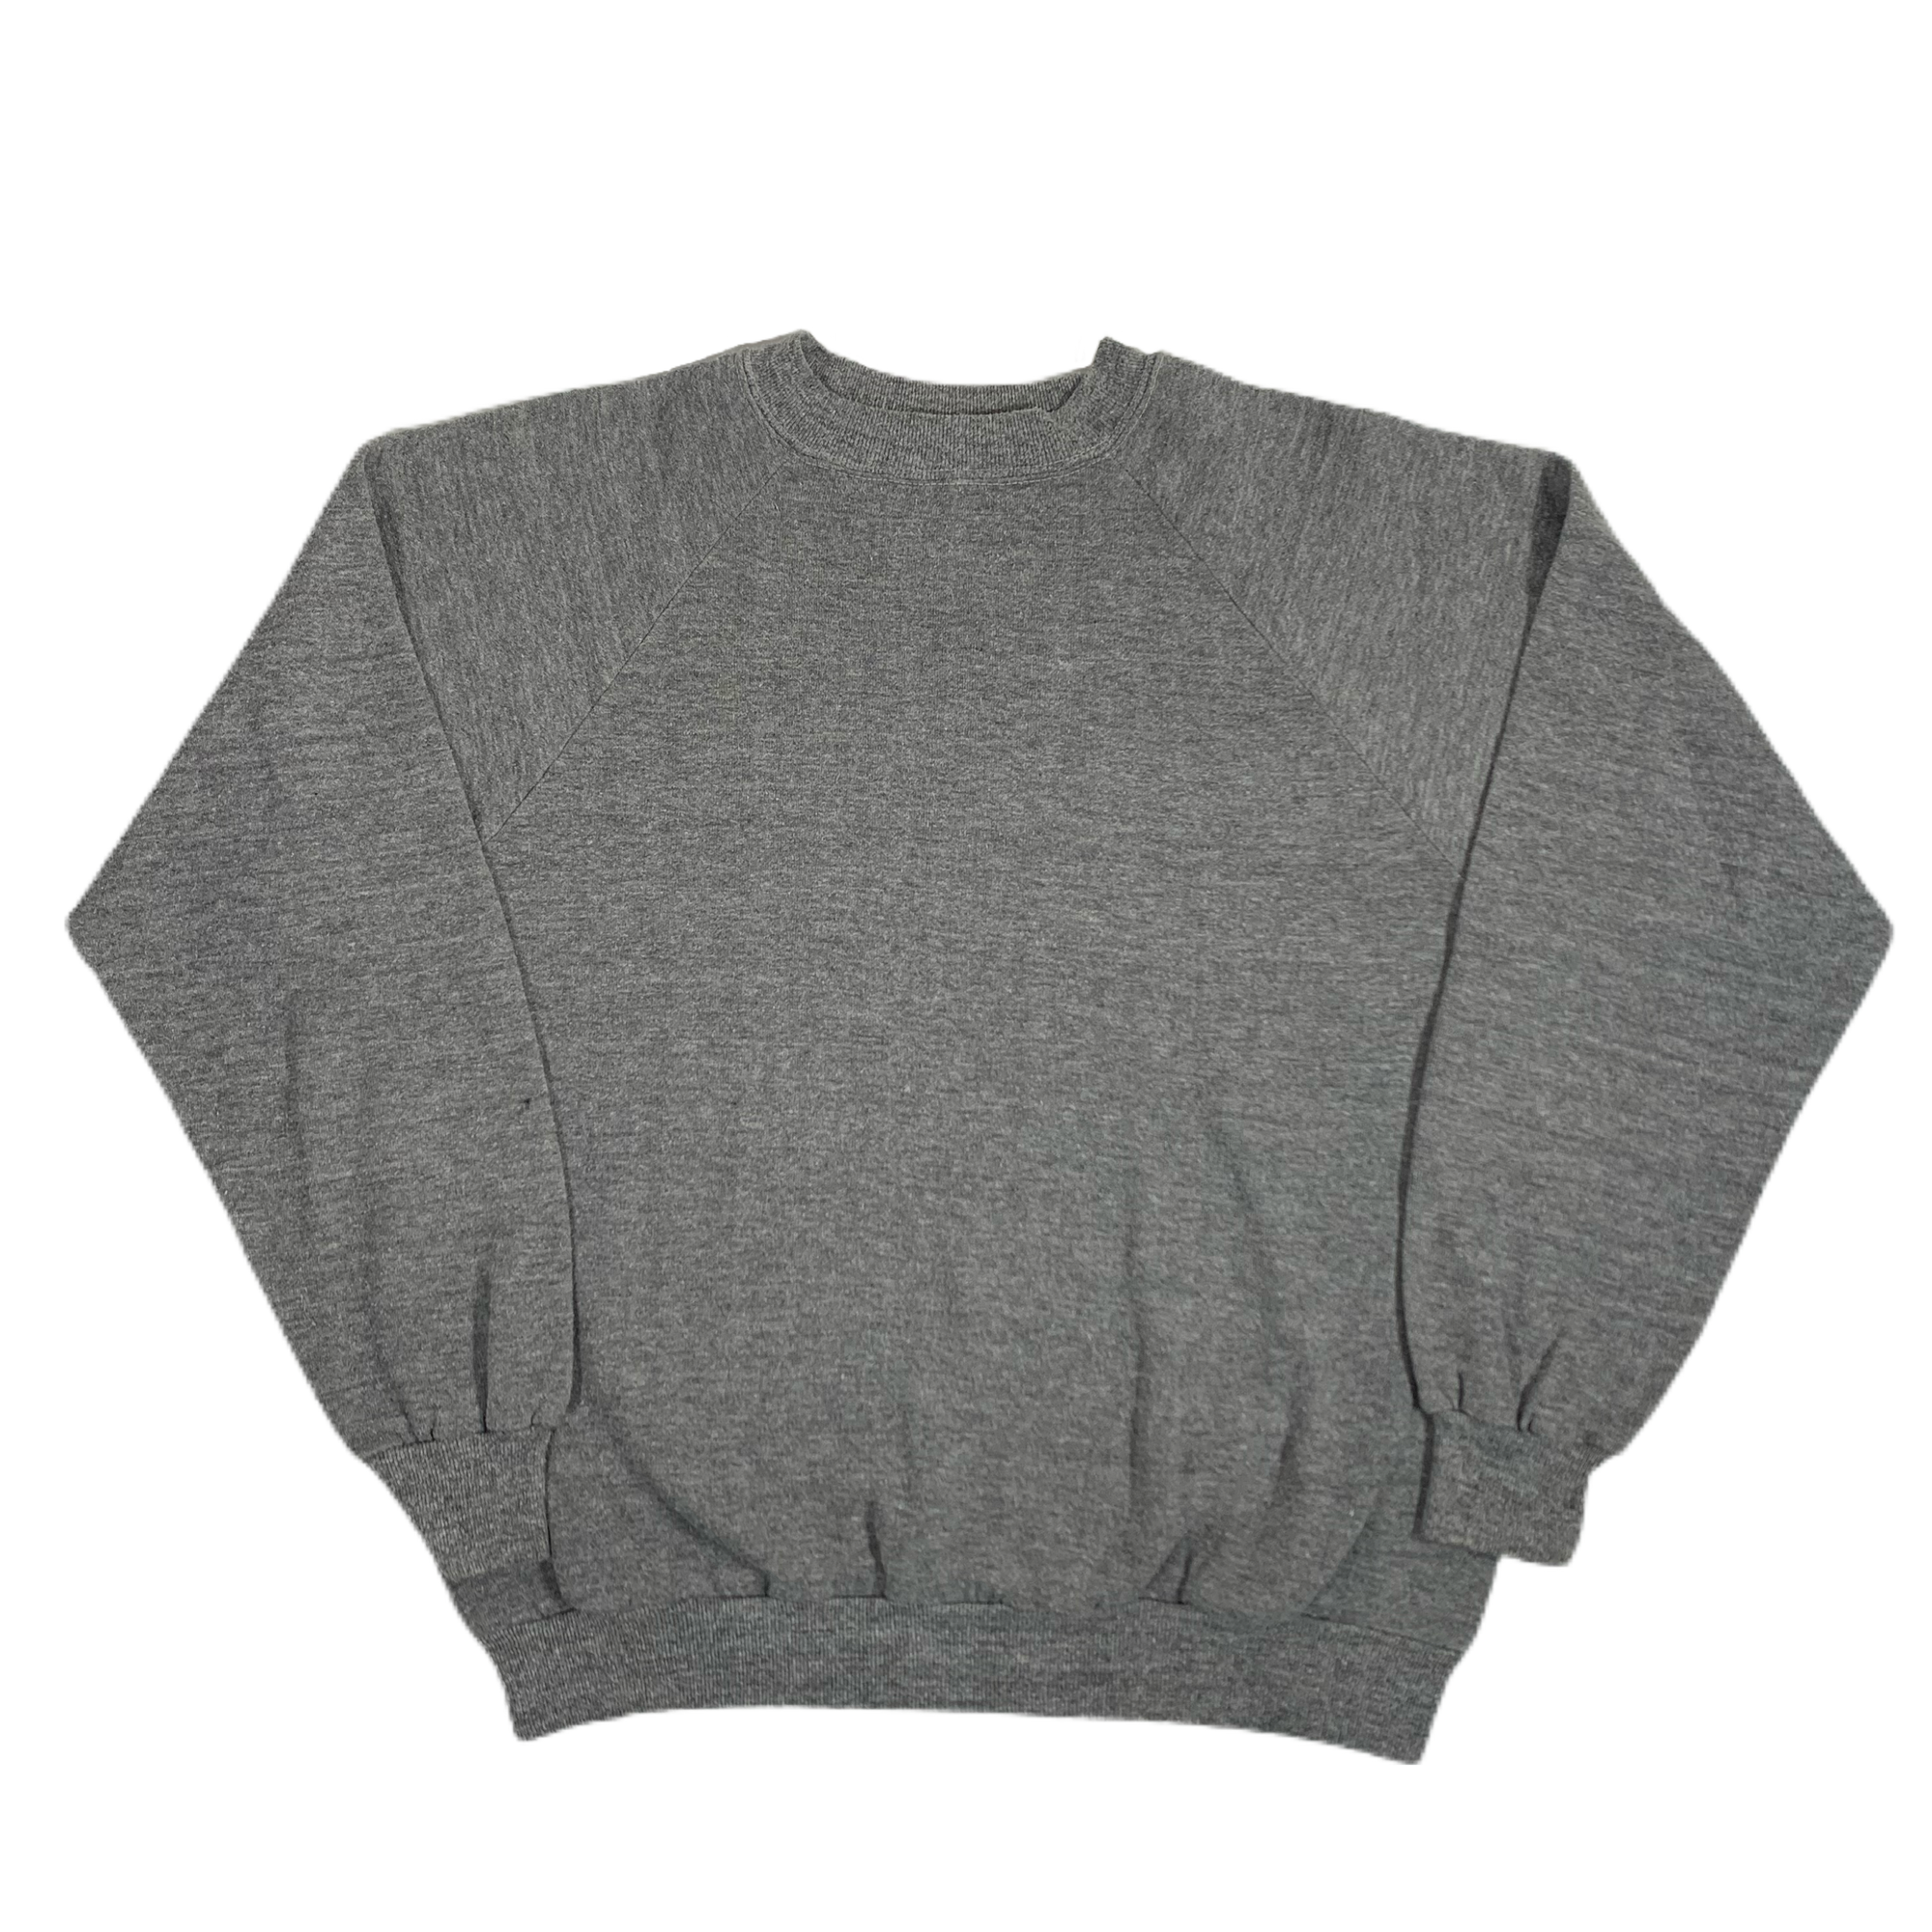 Vintage Sportswear "Tri-Blend" Raglan Sweatshirt - jointcustodydc